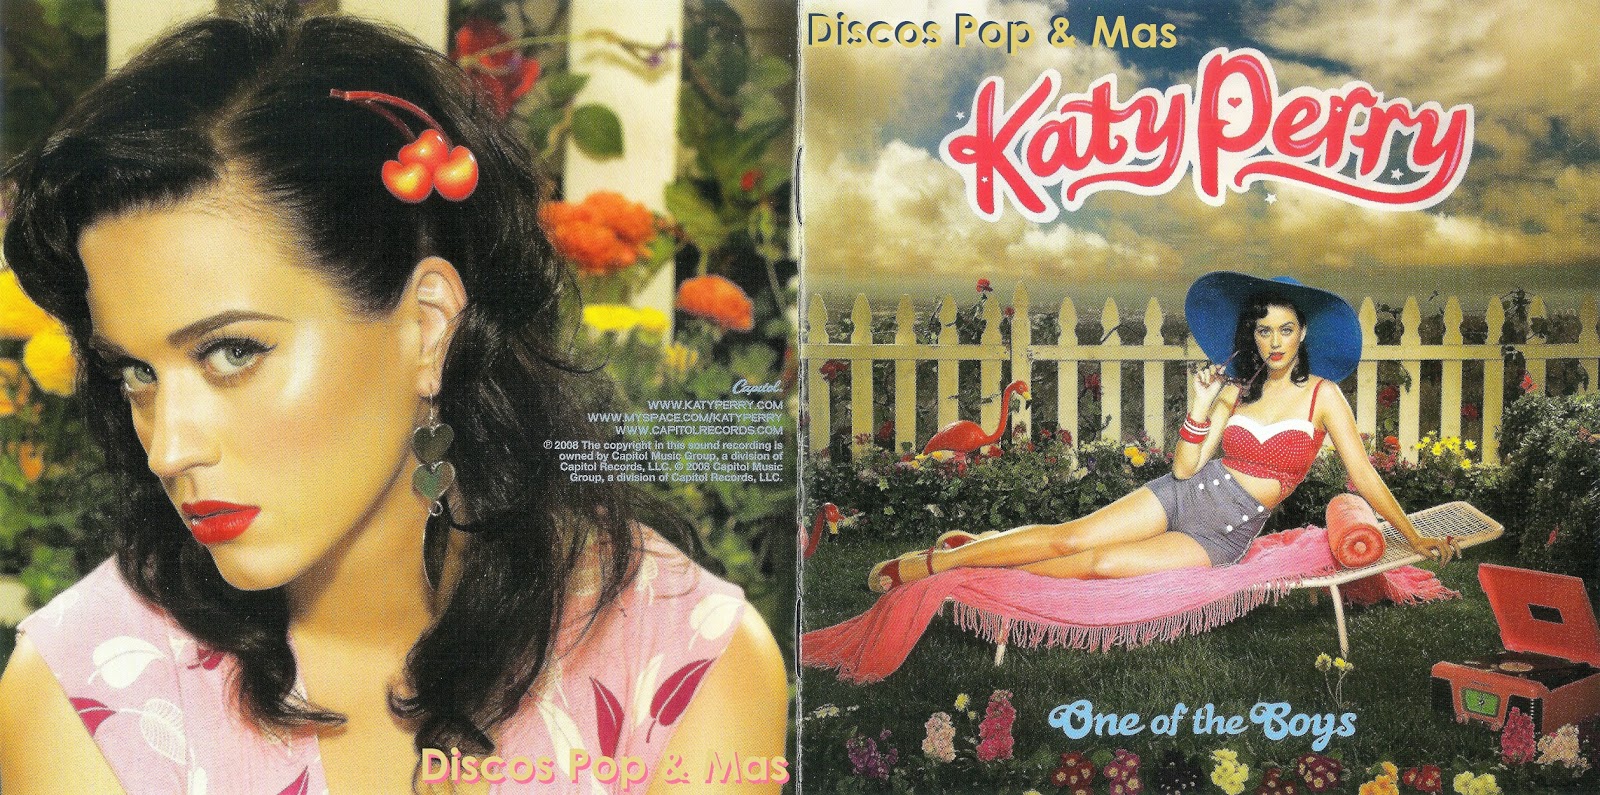 Discos Pop & Mas: Katy Perry - One of the Boys